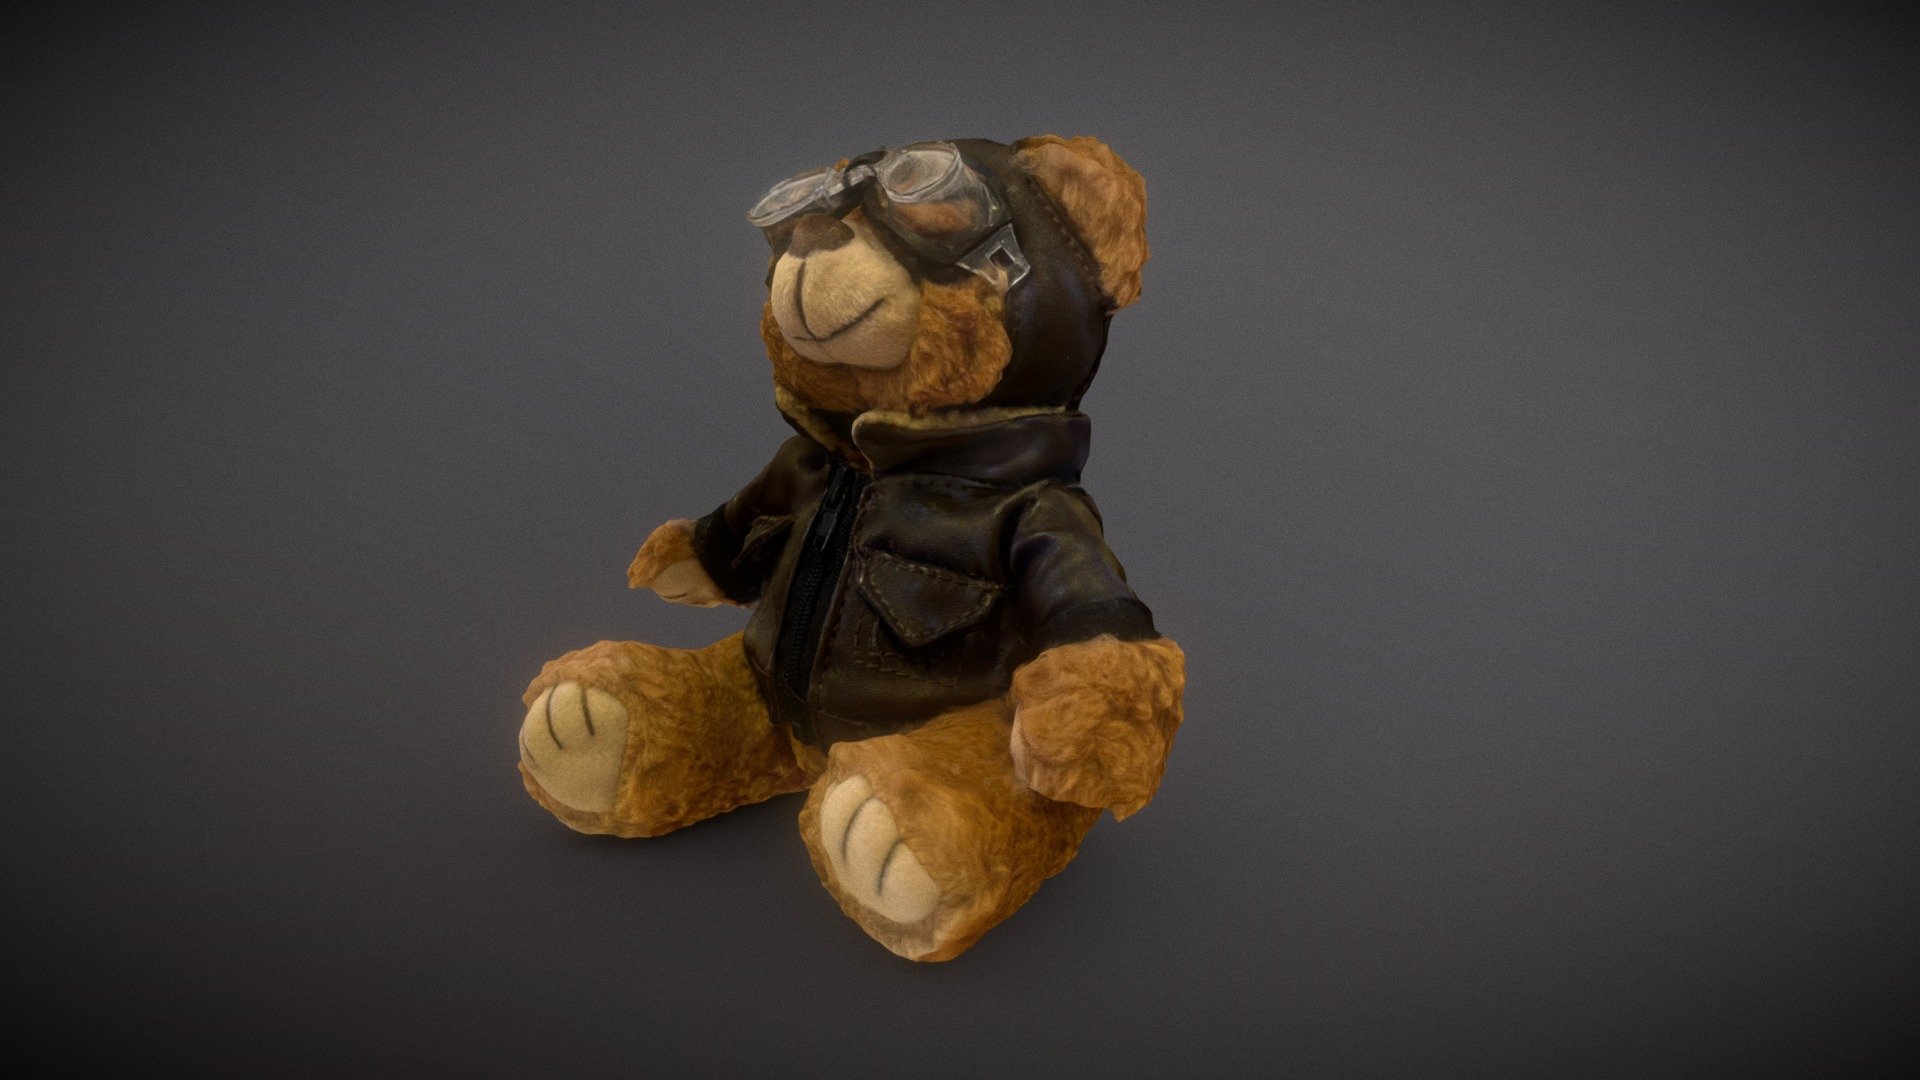 Teddy bear scanning model, adventurer bear 3d model